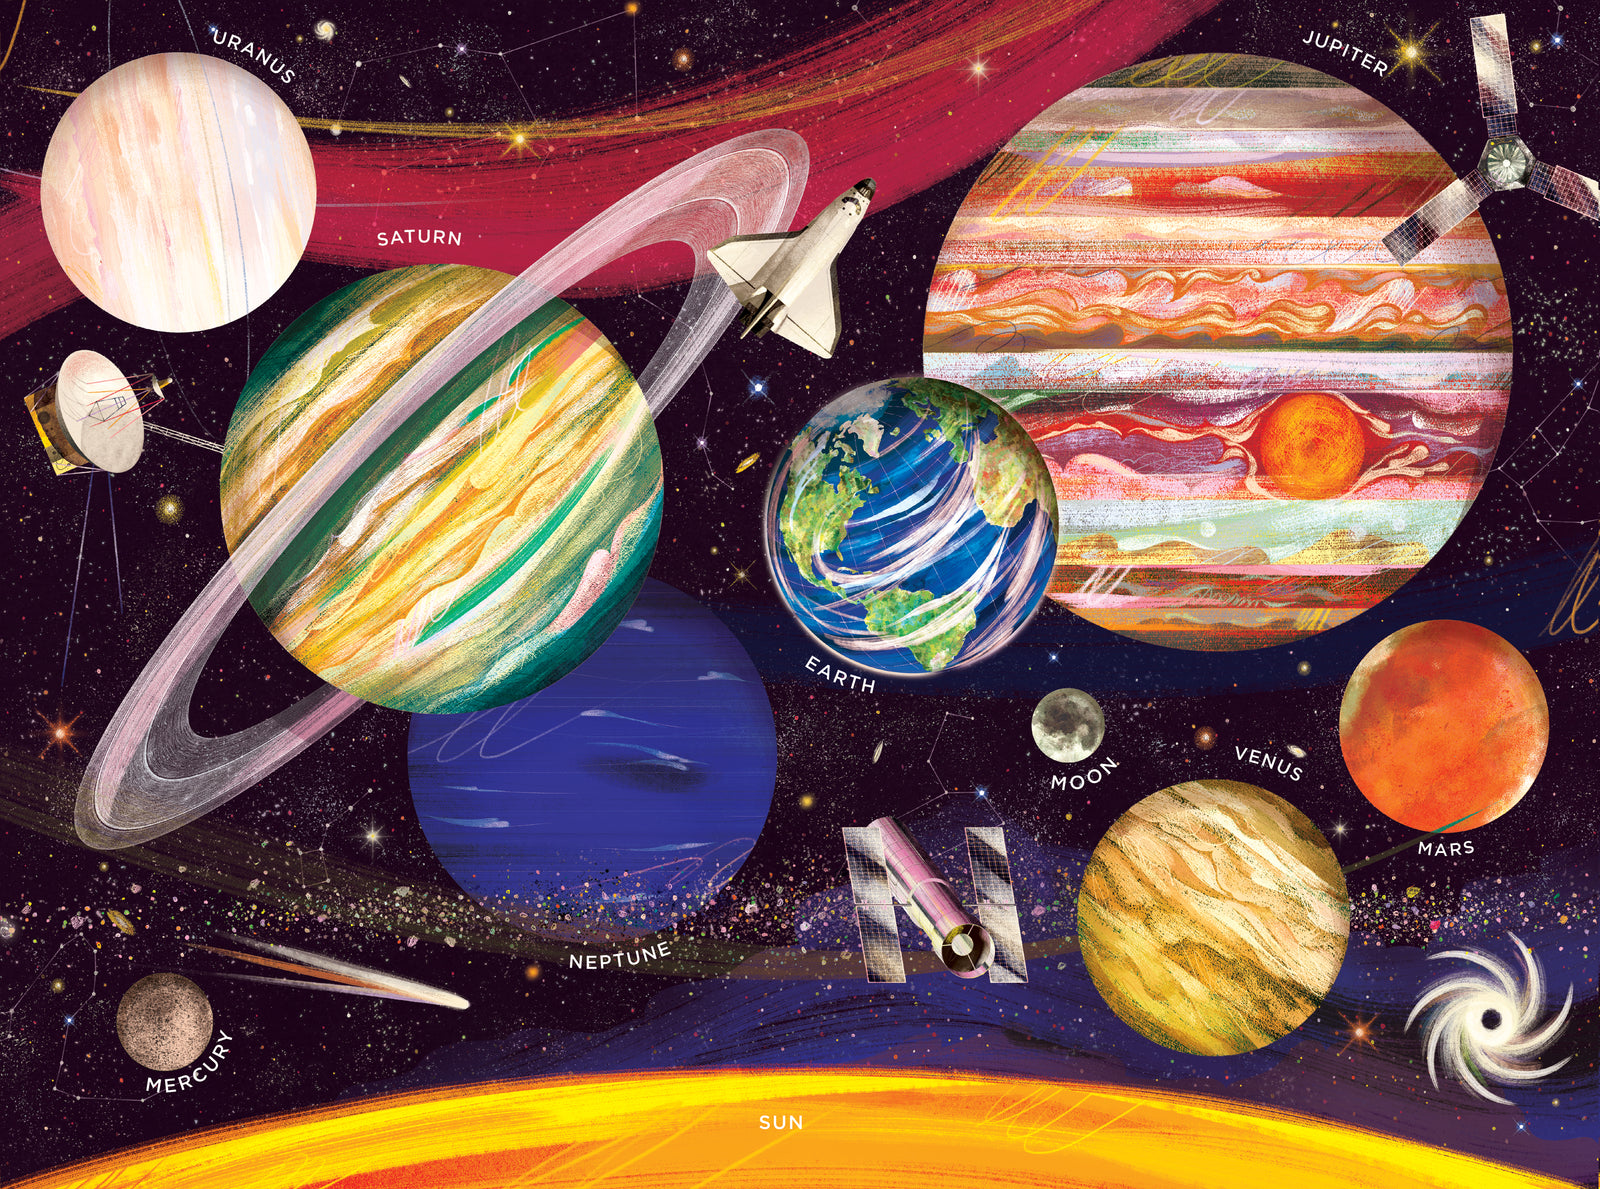 Planets of solar system draw – Line art illustrations